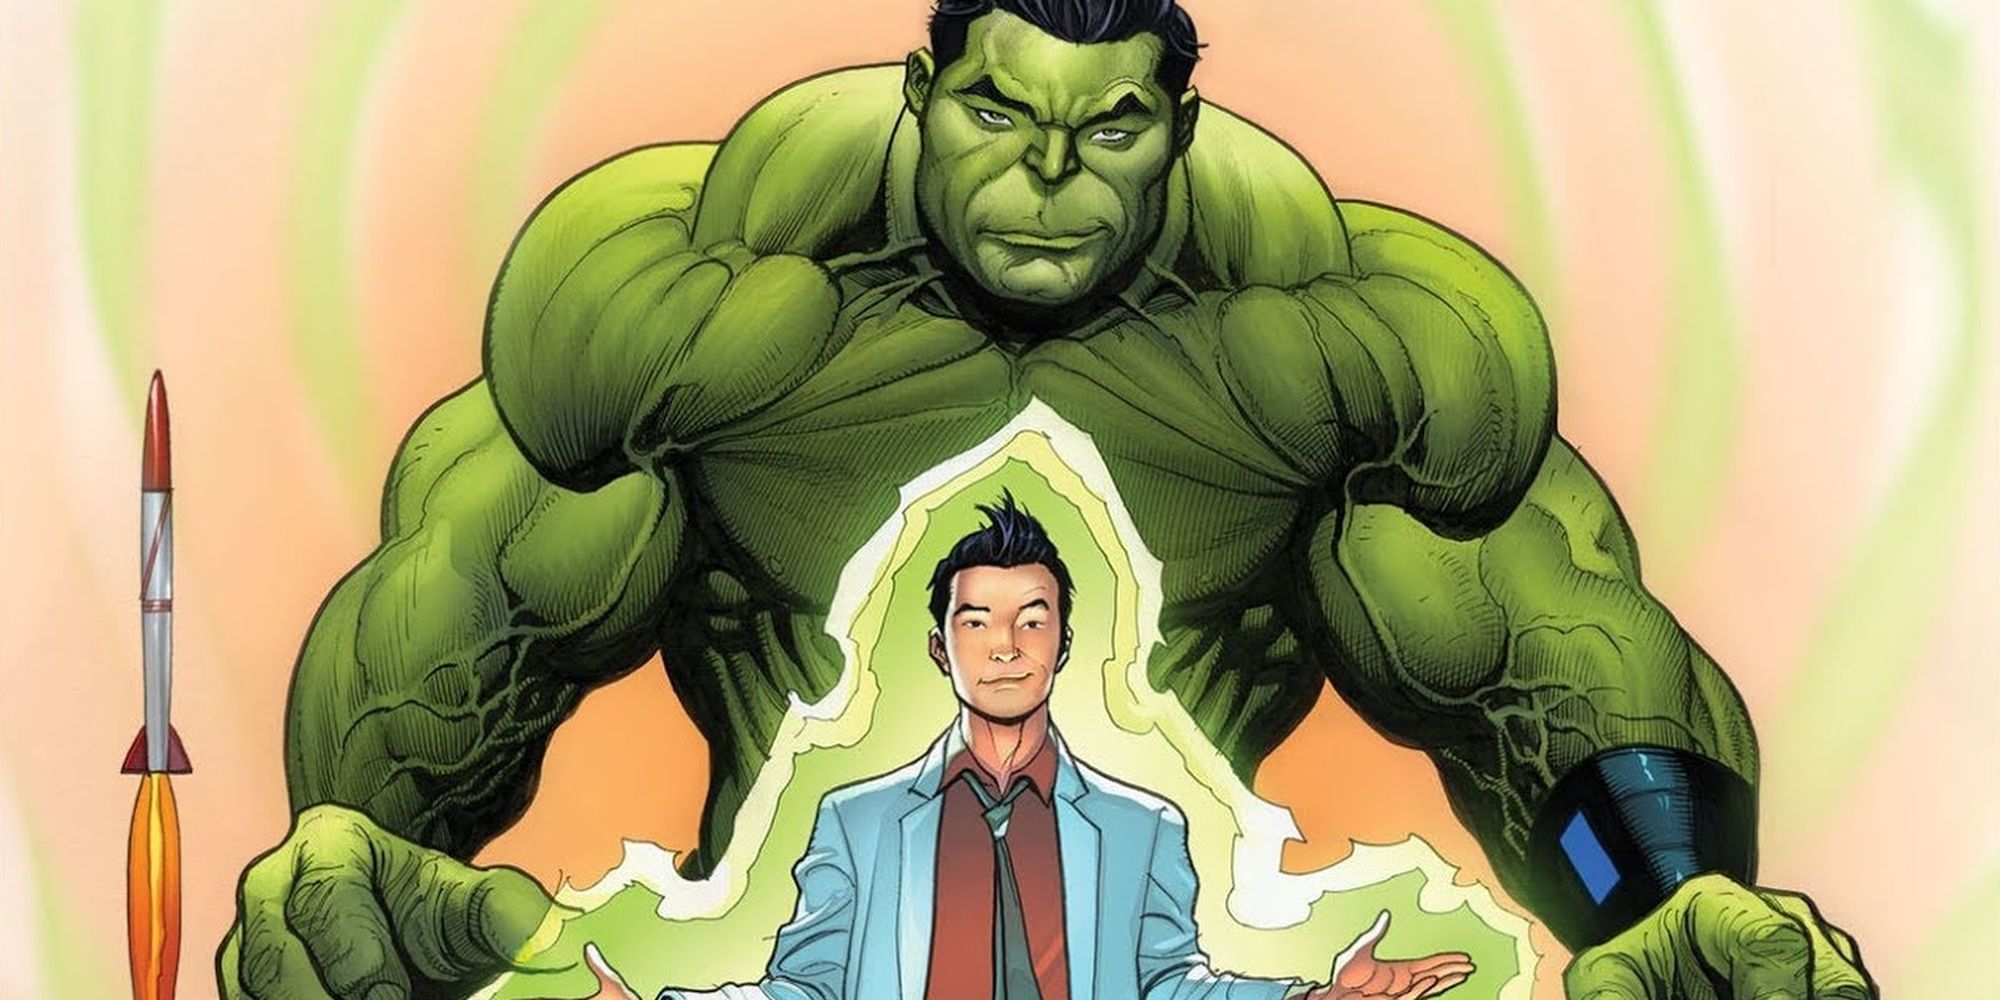 Amadeus Cho and his Hulk form